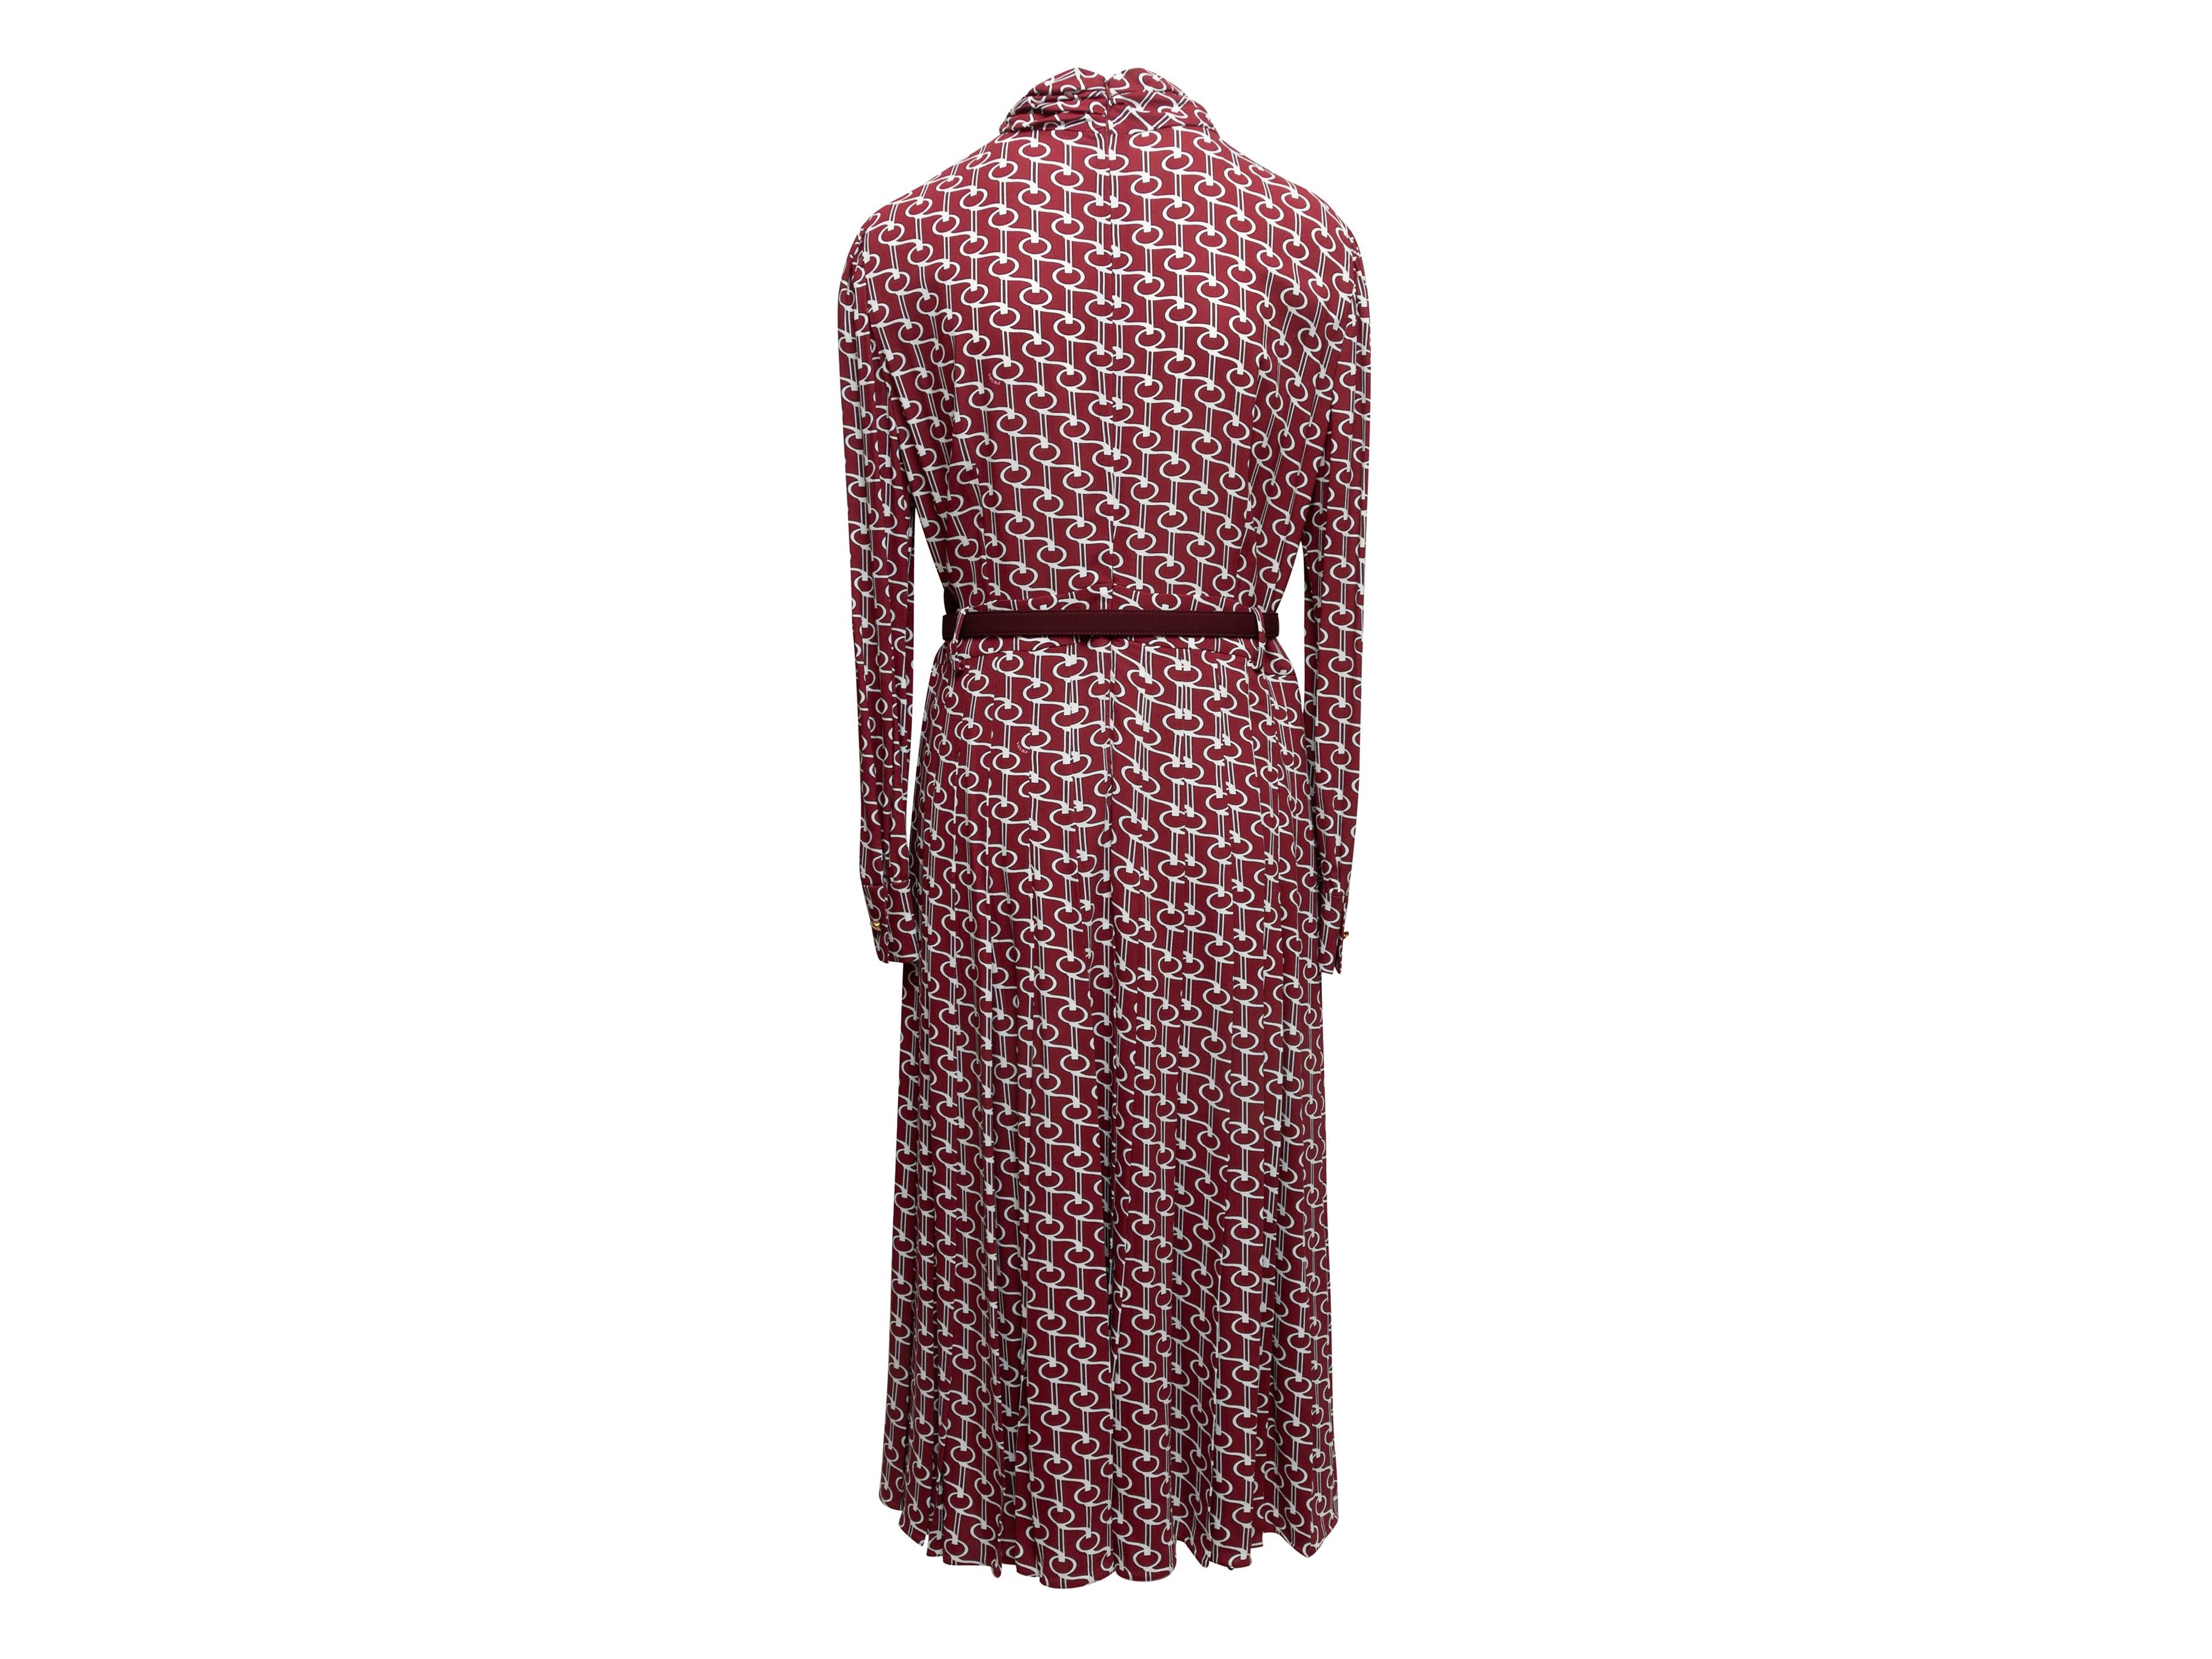 Women's Burgundy & White Prada Abstract Printed Dress Size US M/L